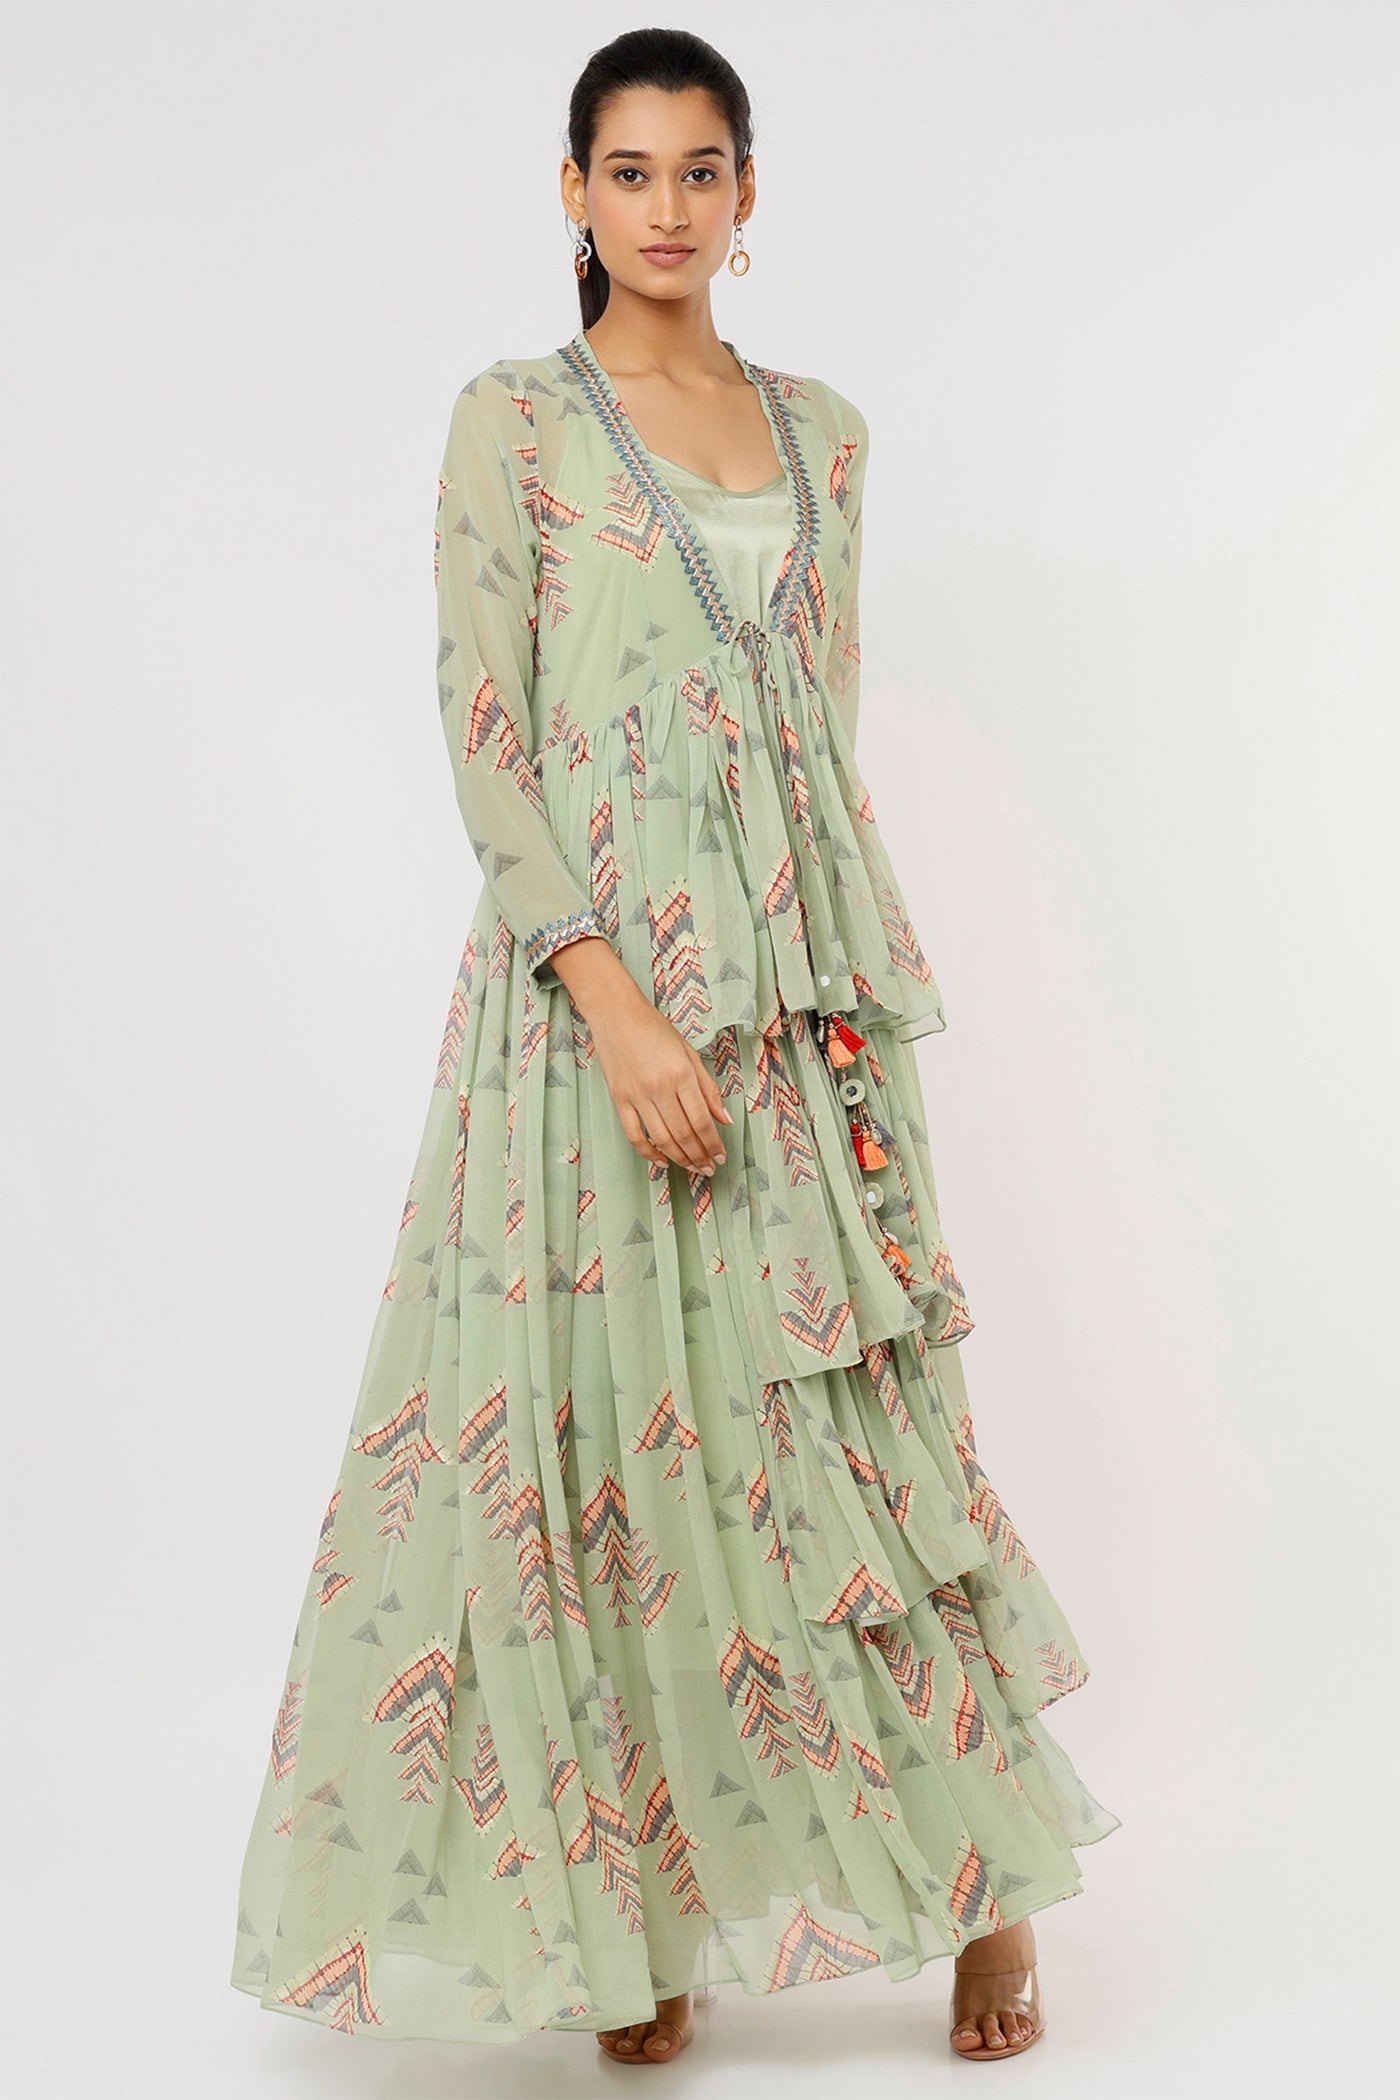 Gopi vaid Ira Tiered Long Jacket mint green festive Indian designer wear online shopping melange singapore